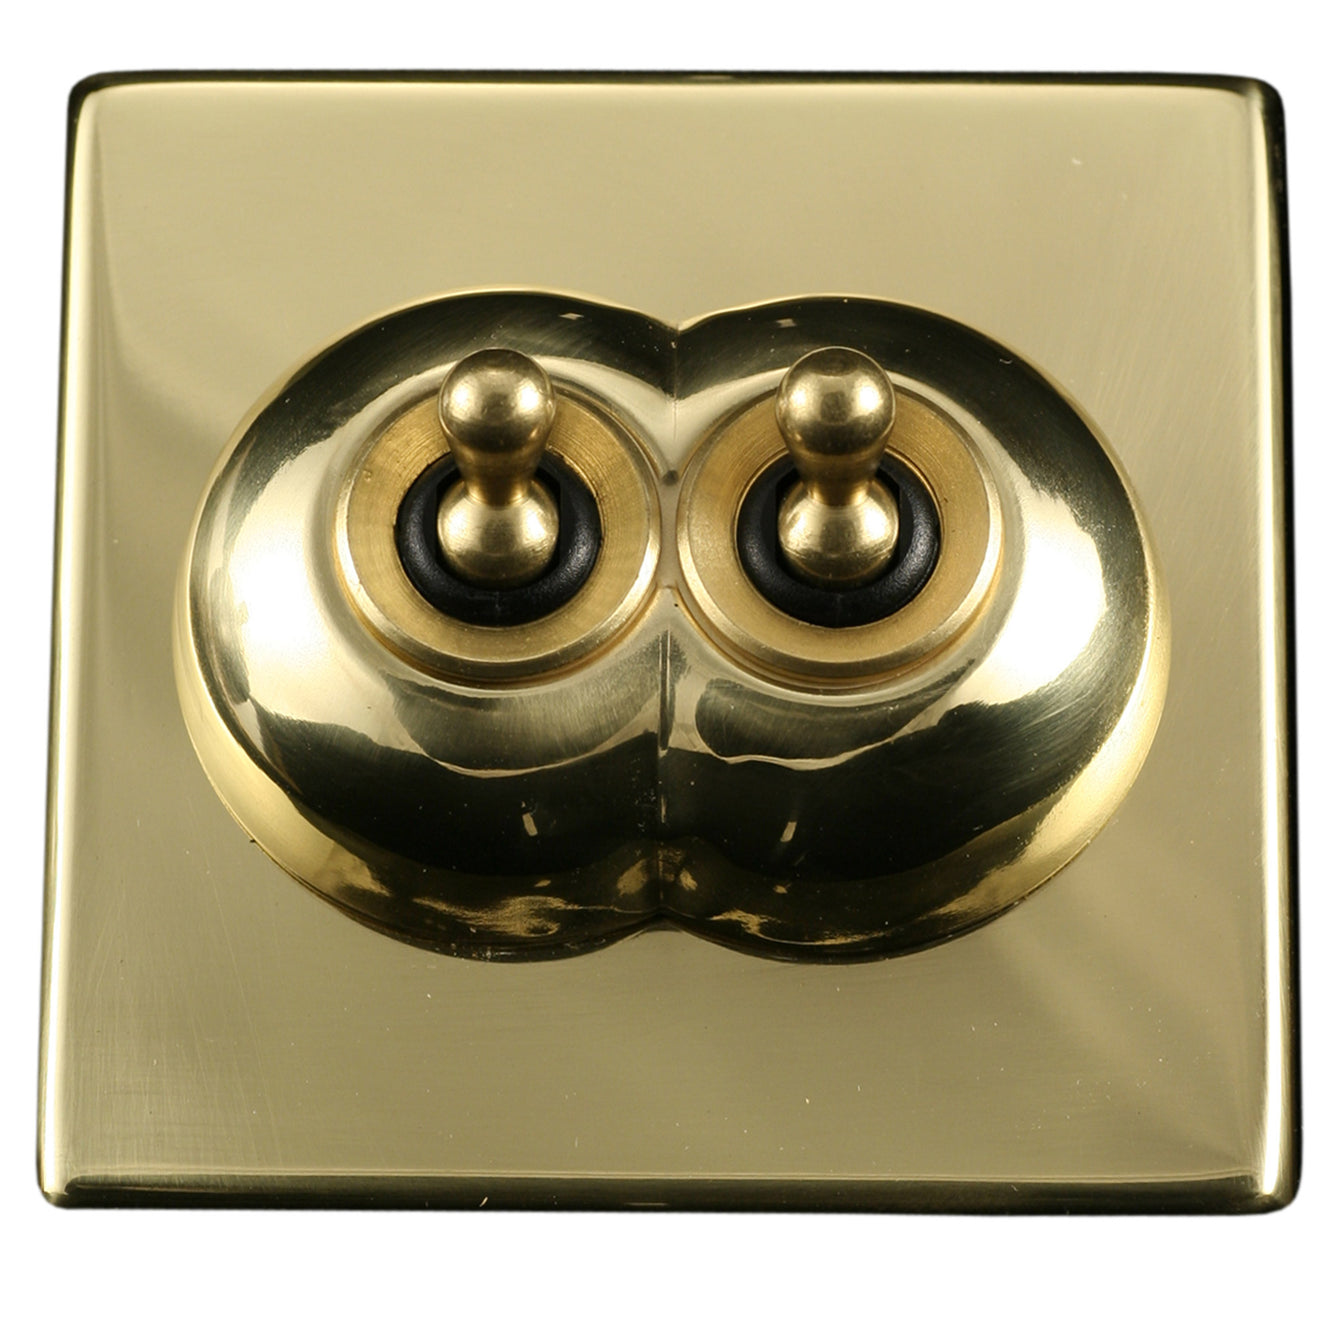 ElekTek Convert-a-Switch Victorian Brass Light Switch Toggle Cover Plate - Buy It Better Antique Brass